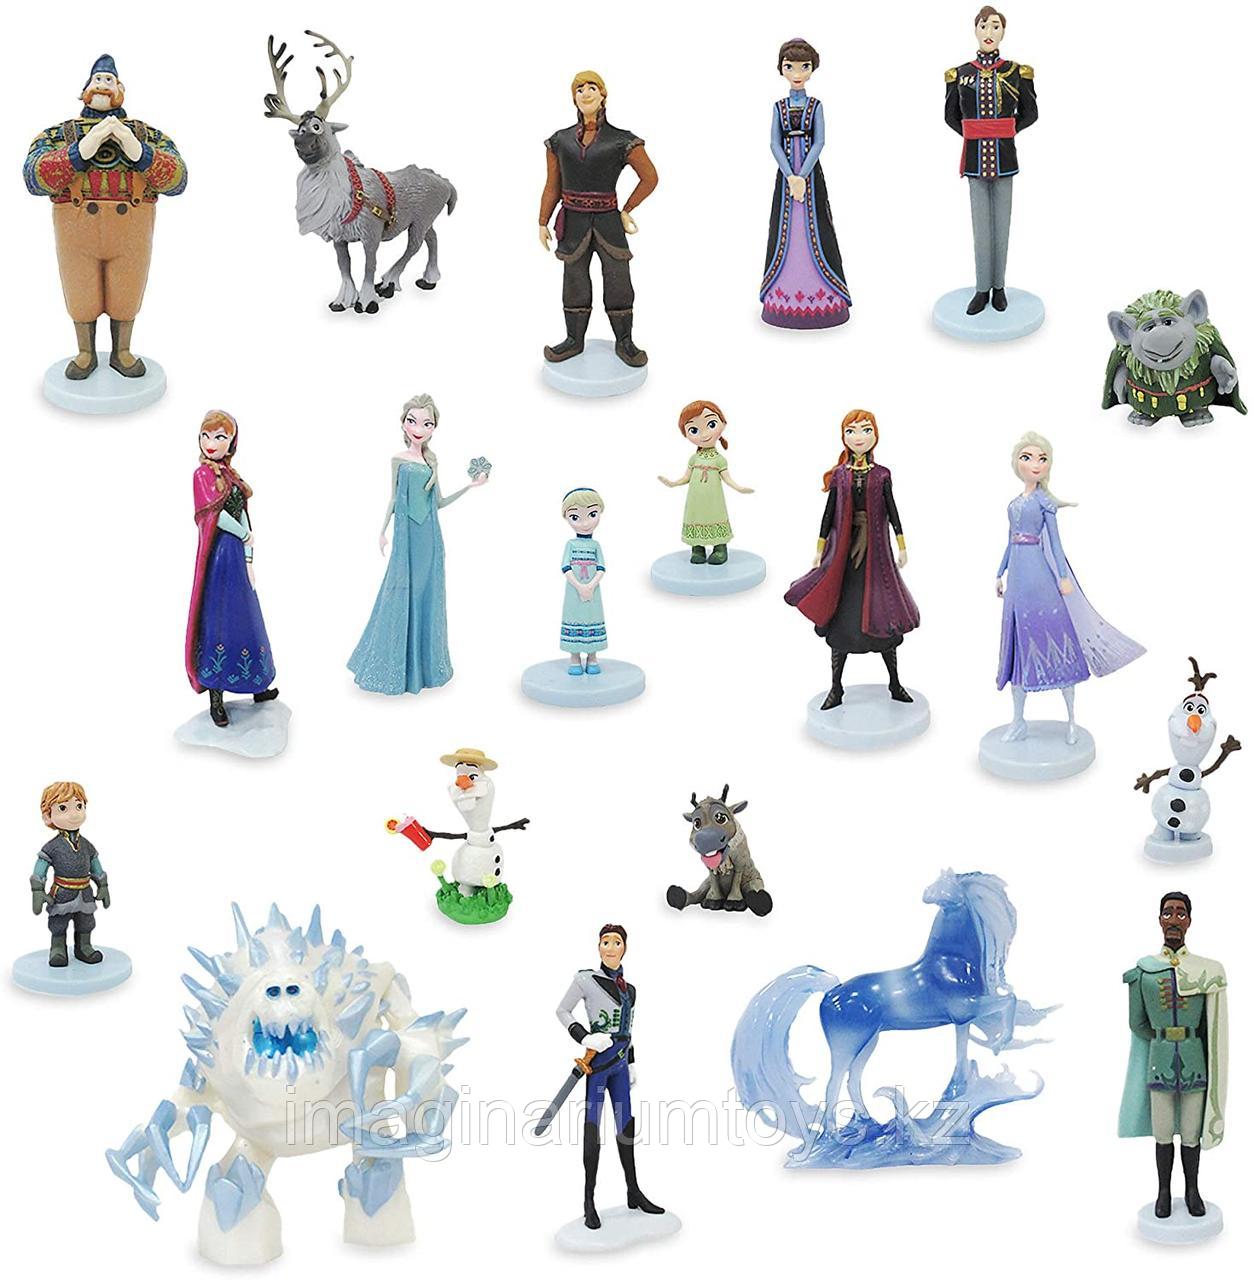 Мега набор фигурок Холодное сердце «Frozen» Disney